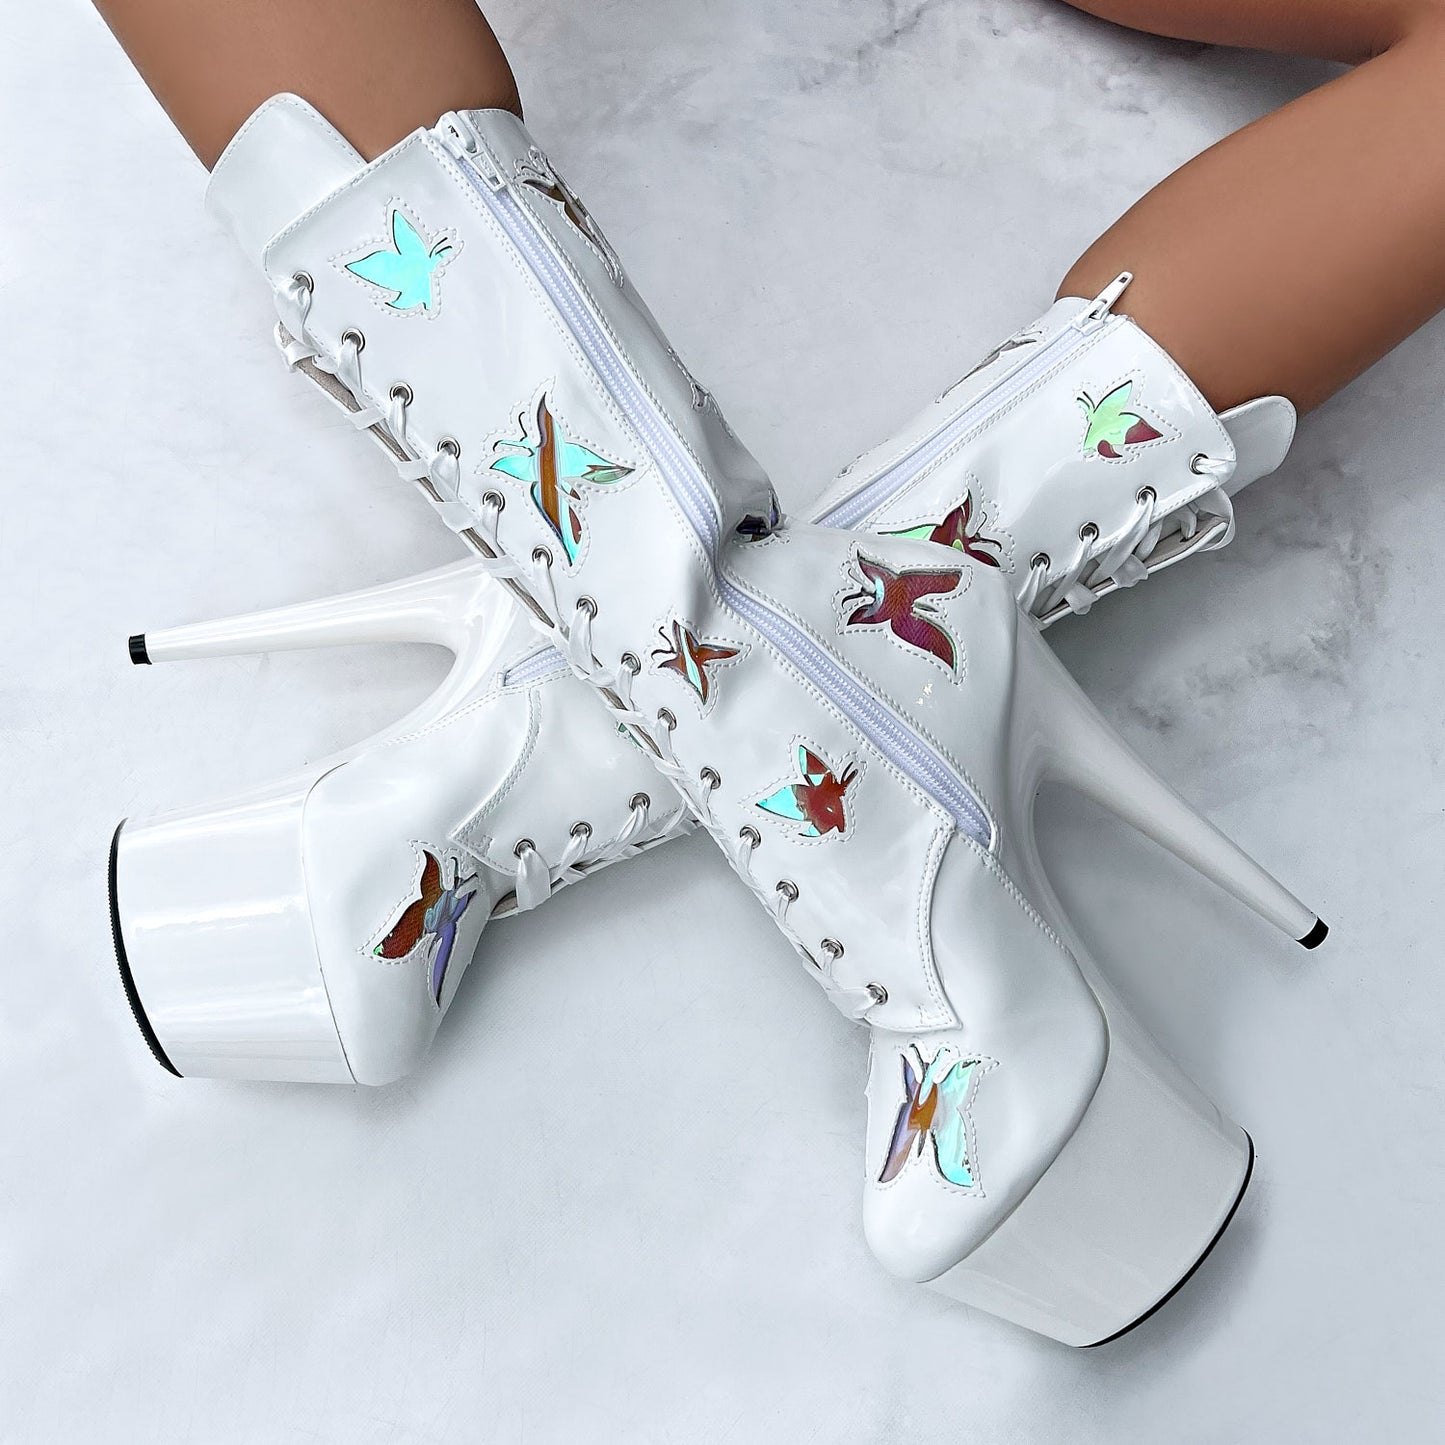 Butterfly Boot - White - 7 INCH, stripper shoe, stripper heel, pole heel, not a pleaser, platform, dancer, pole dance, floor work